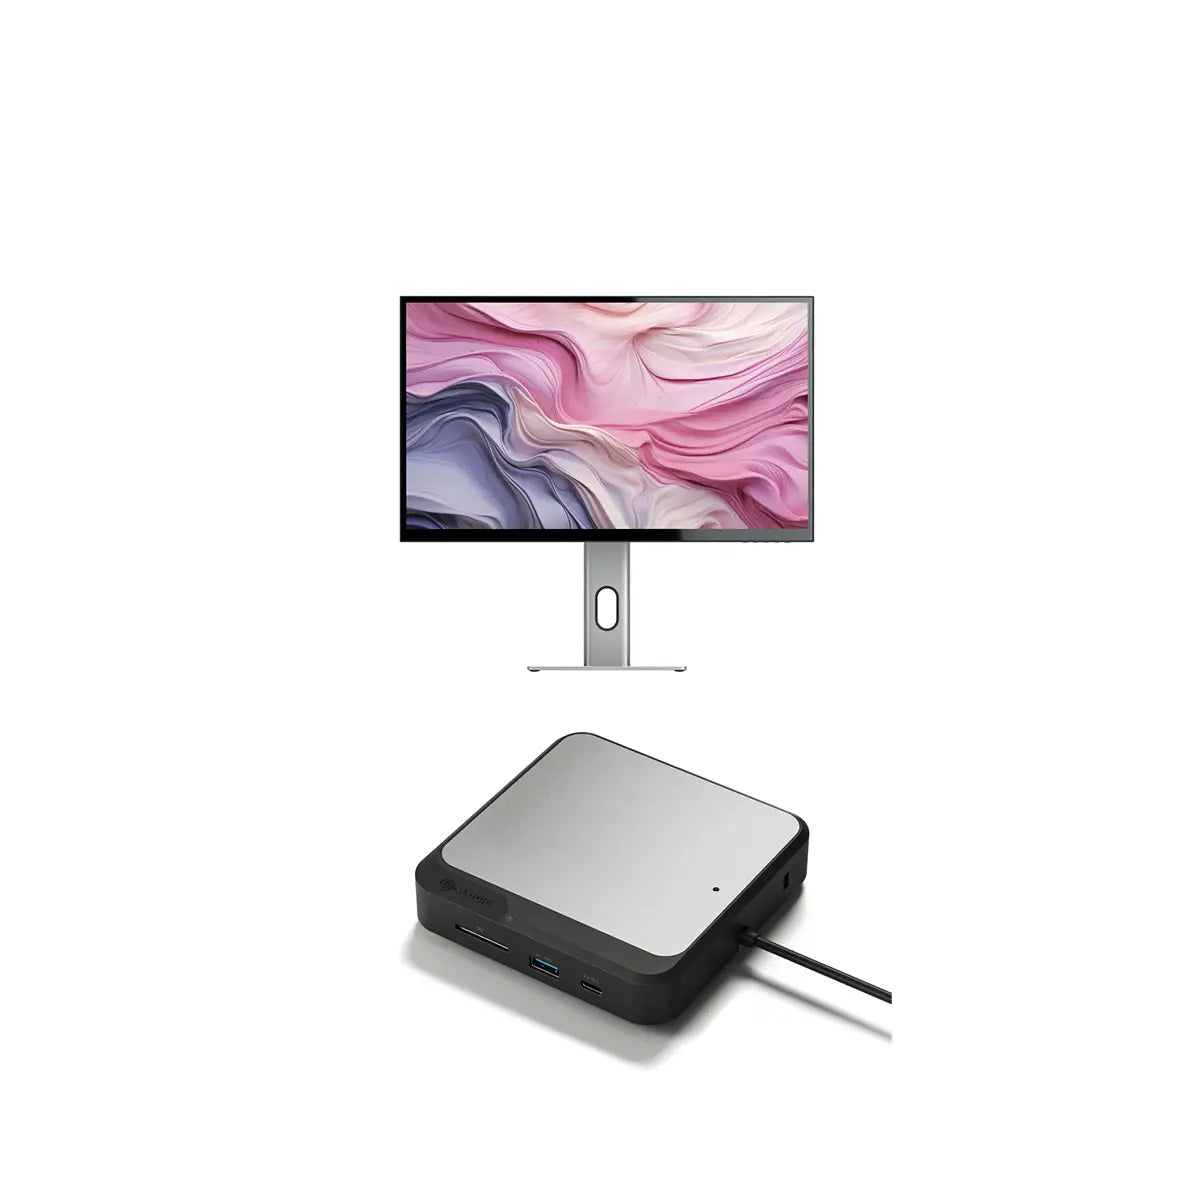 Thunderbolt to HDMI adapter for MISURA portable monitors